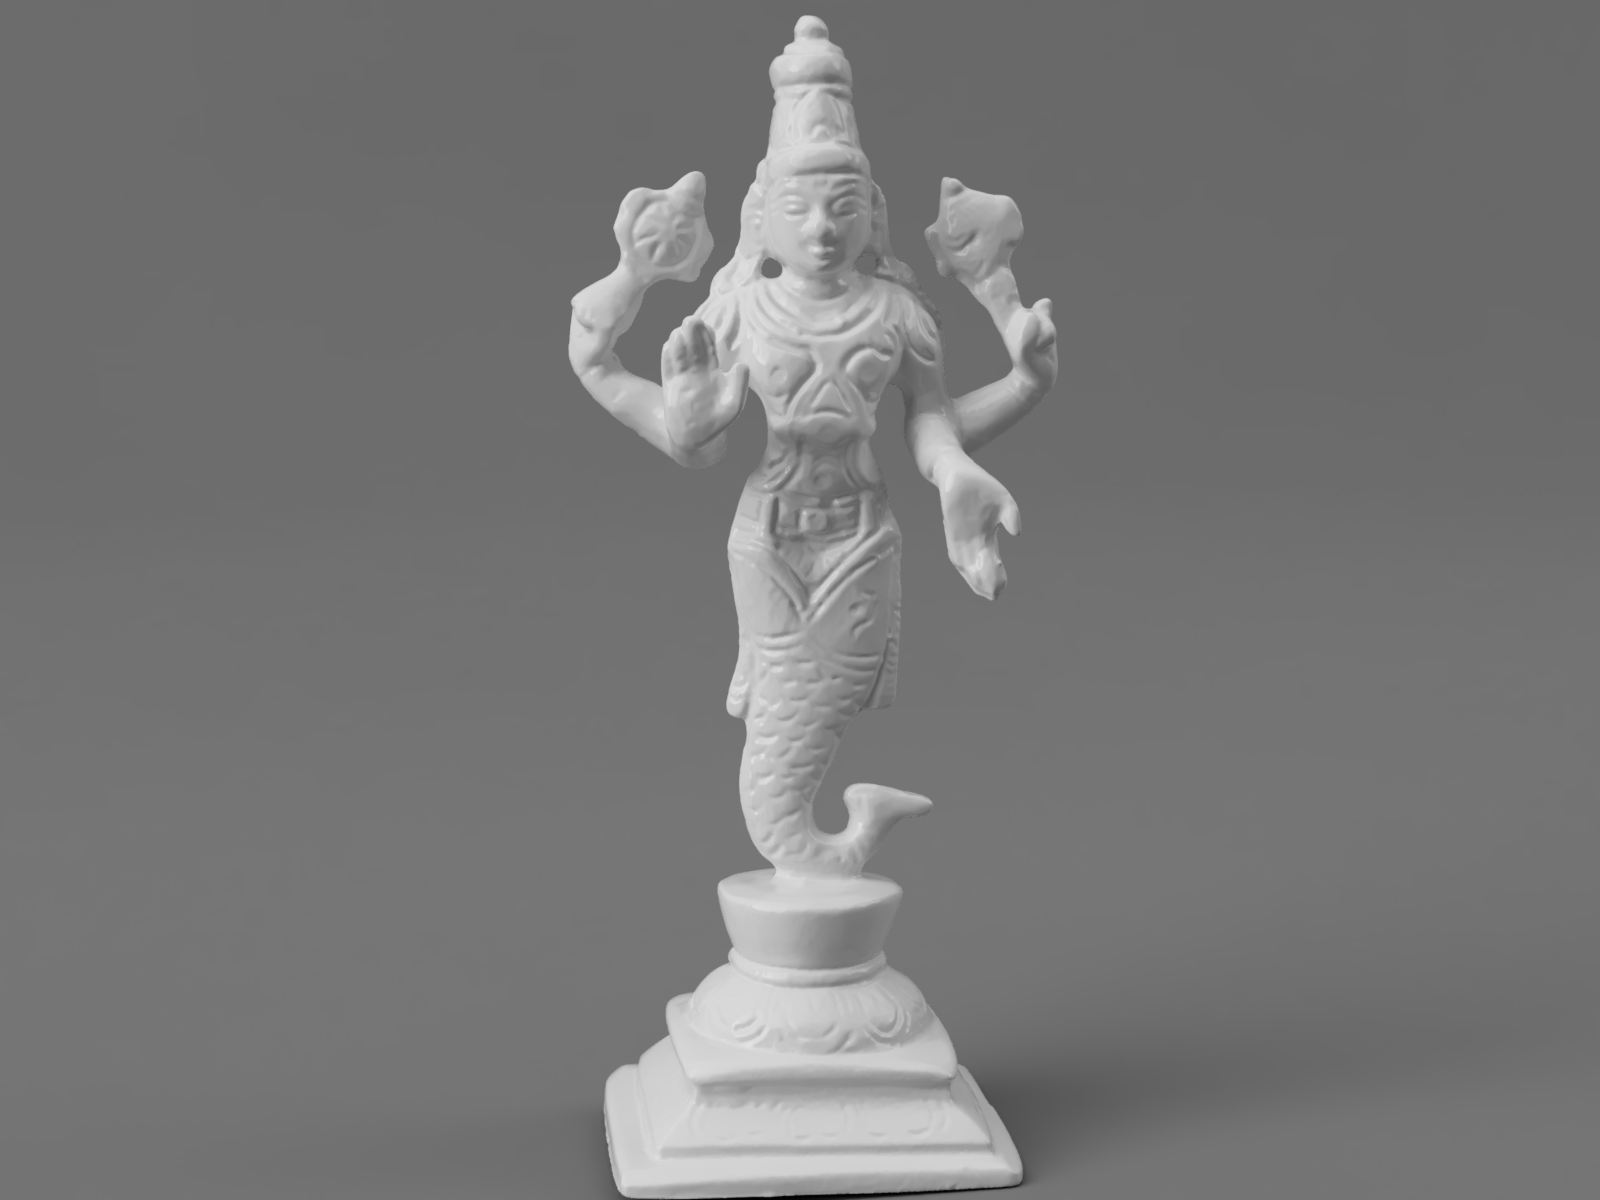 First Avatar of Vishnu - Matsya (The Fish)